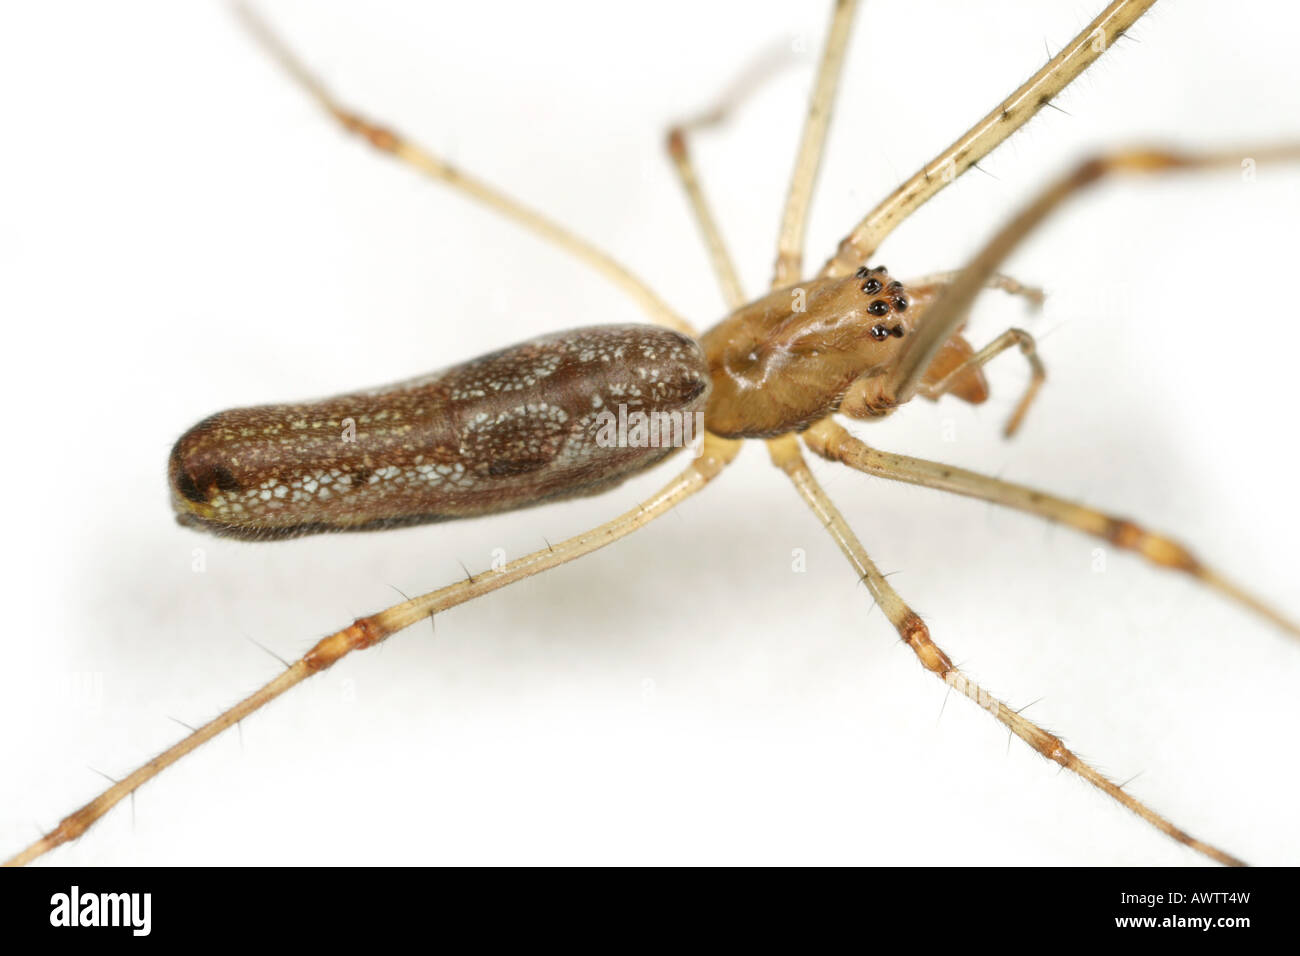 Tetragnatha montana a, family Tetragnathidae, a long jawed stretch spider. Stock Photo